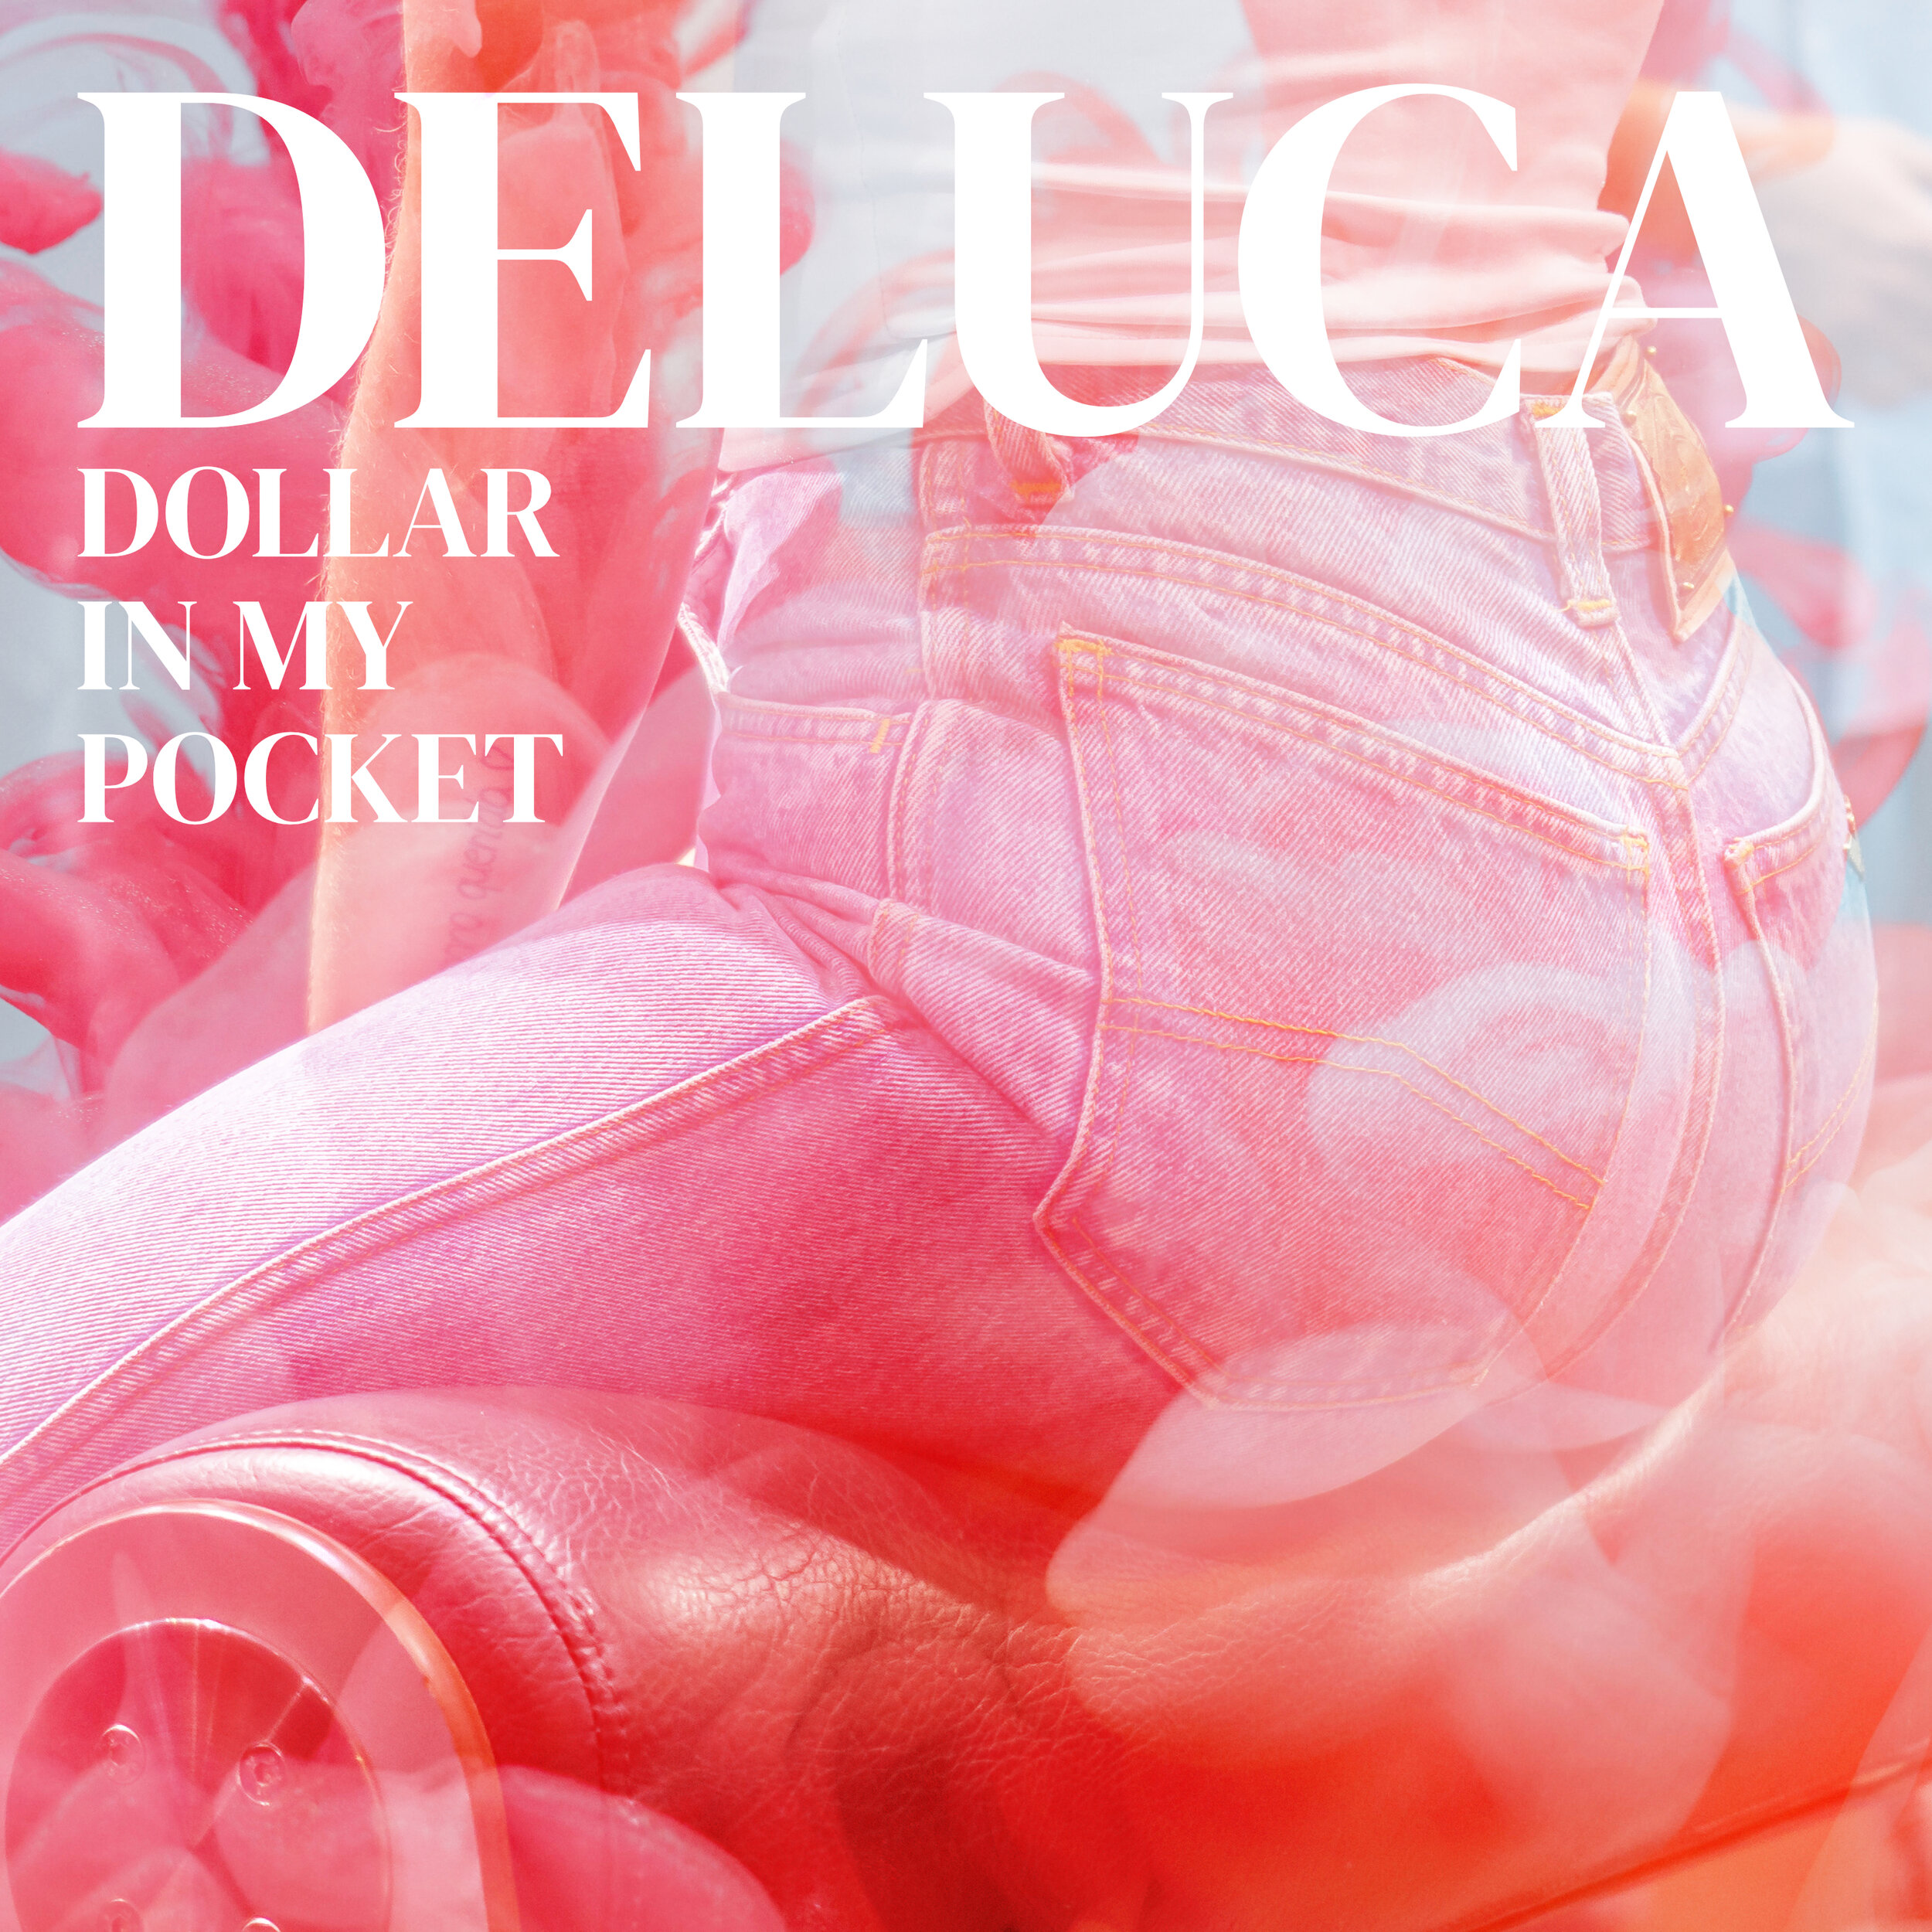 Deluce - Dollar In My Pocket Artwork.jpg